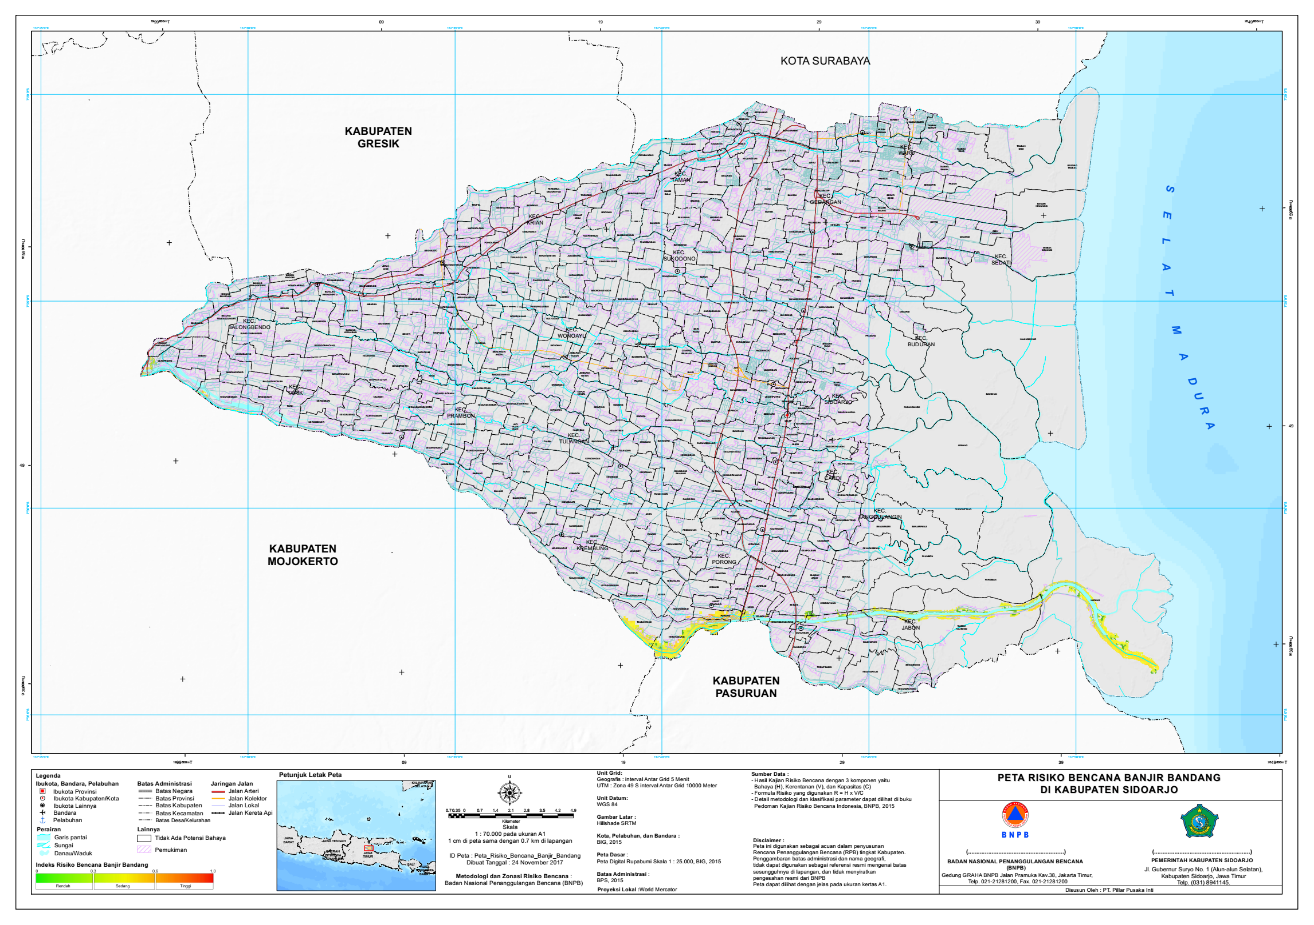 Peta Risiko Bencana Banjir Bandang di Kabupaten Sidoarjo